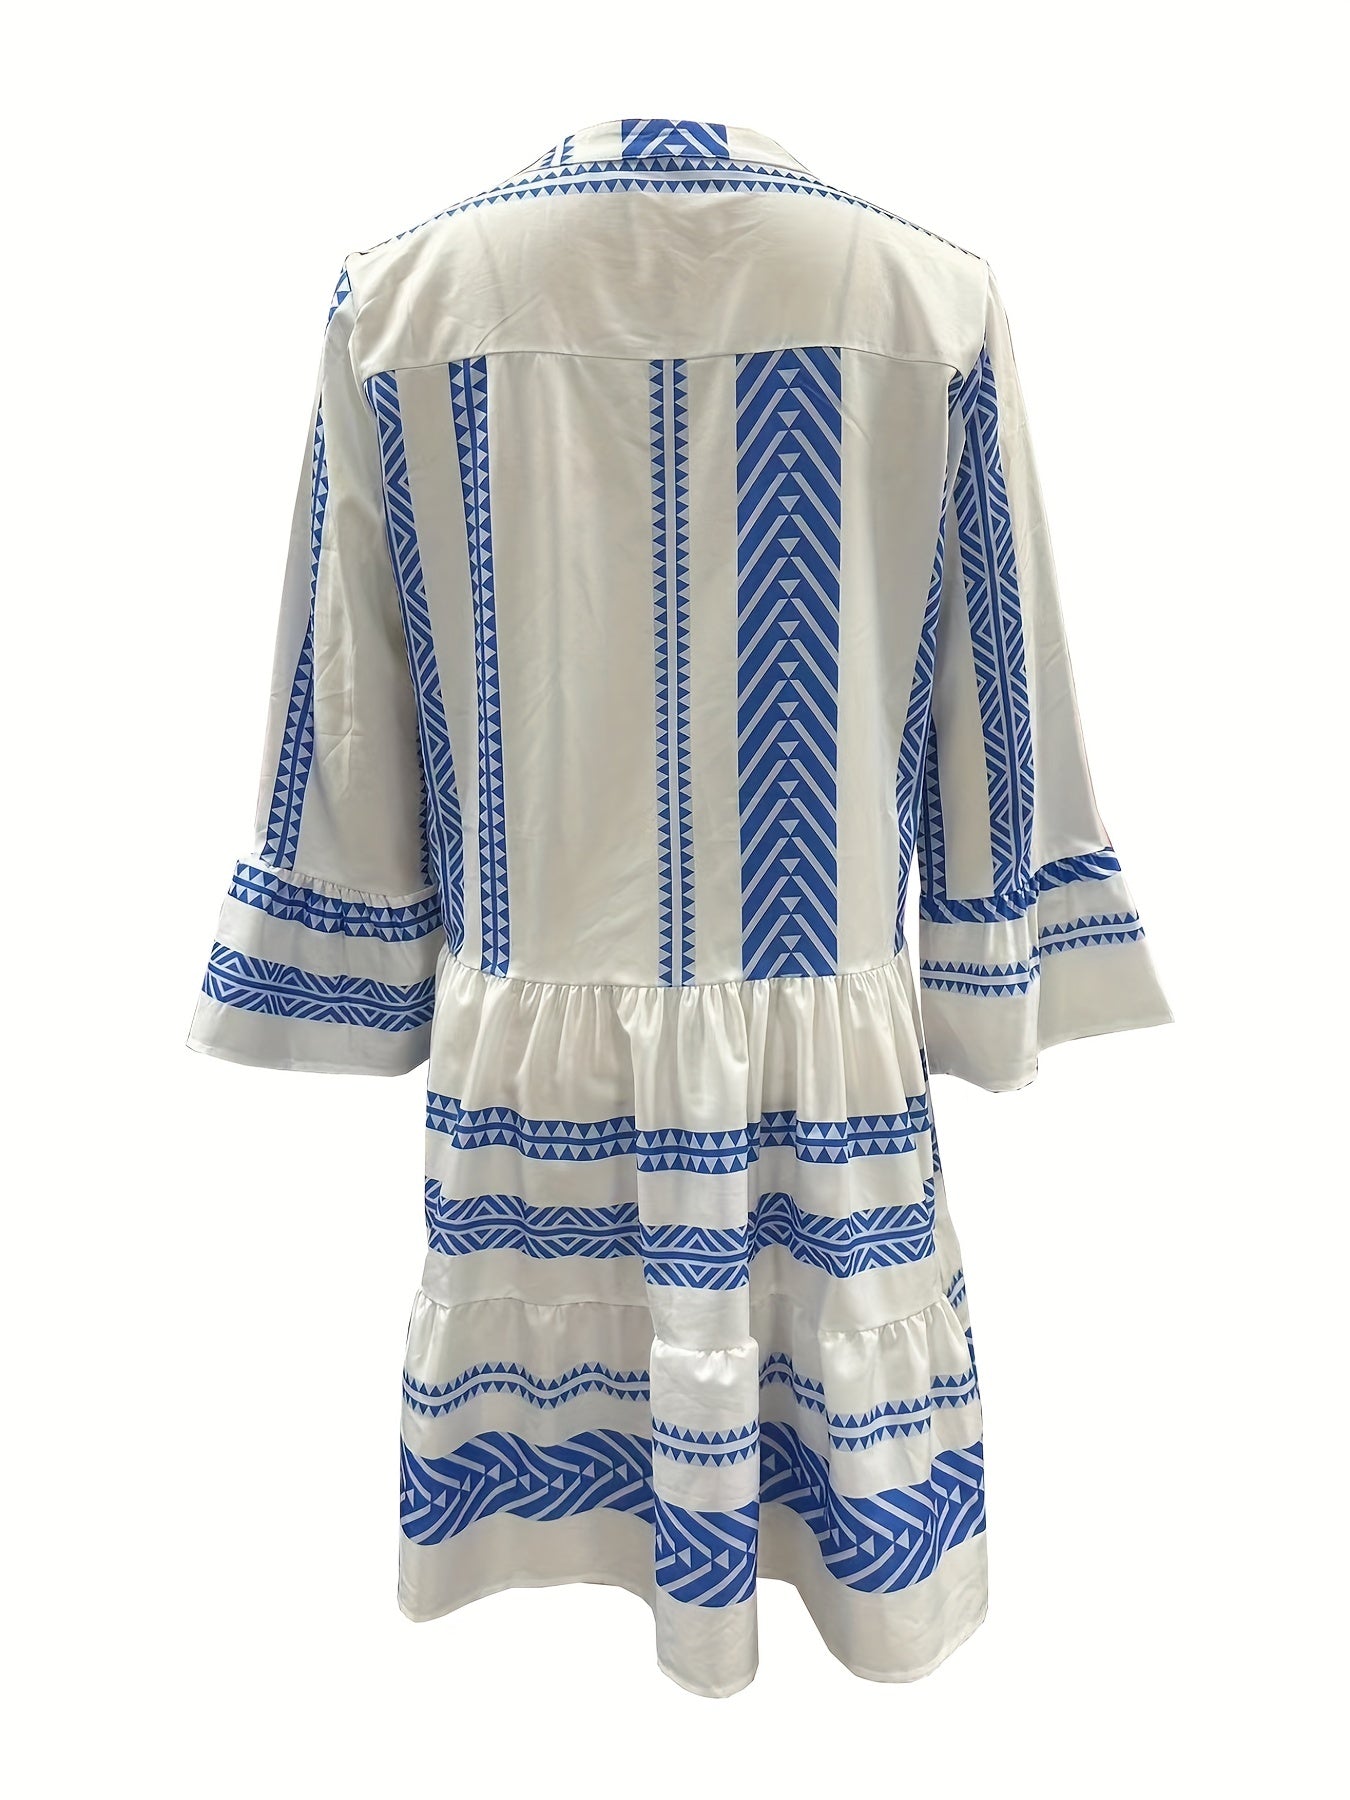 vlovelaw  Tribal Print Dress, Vacation Pleated Flared Sleeve Dress, Women's Clothing